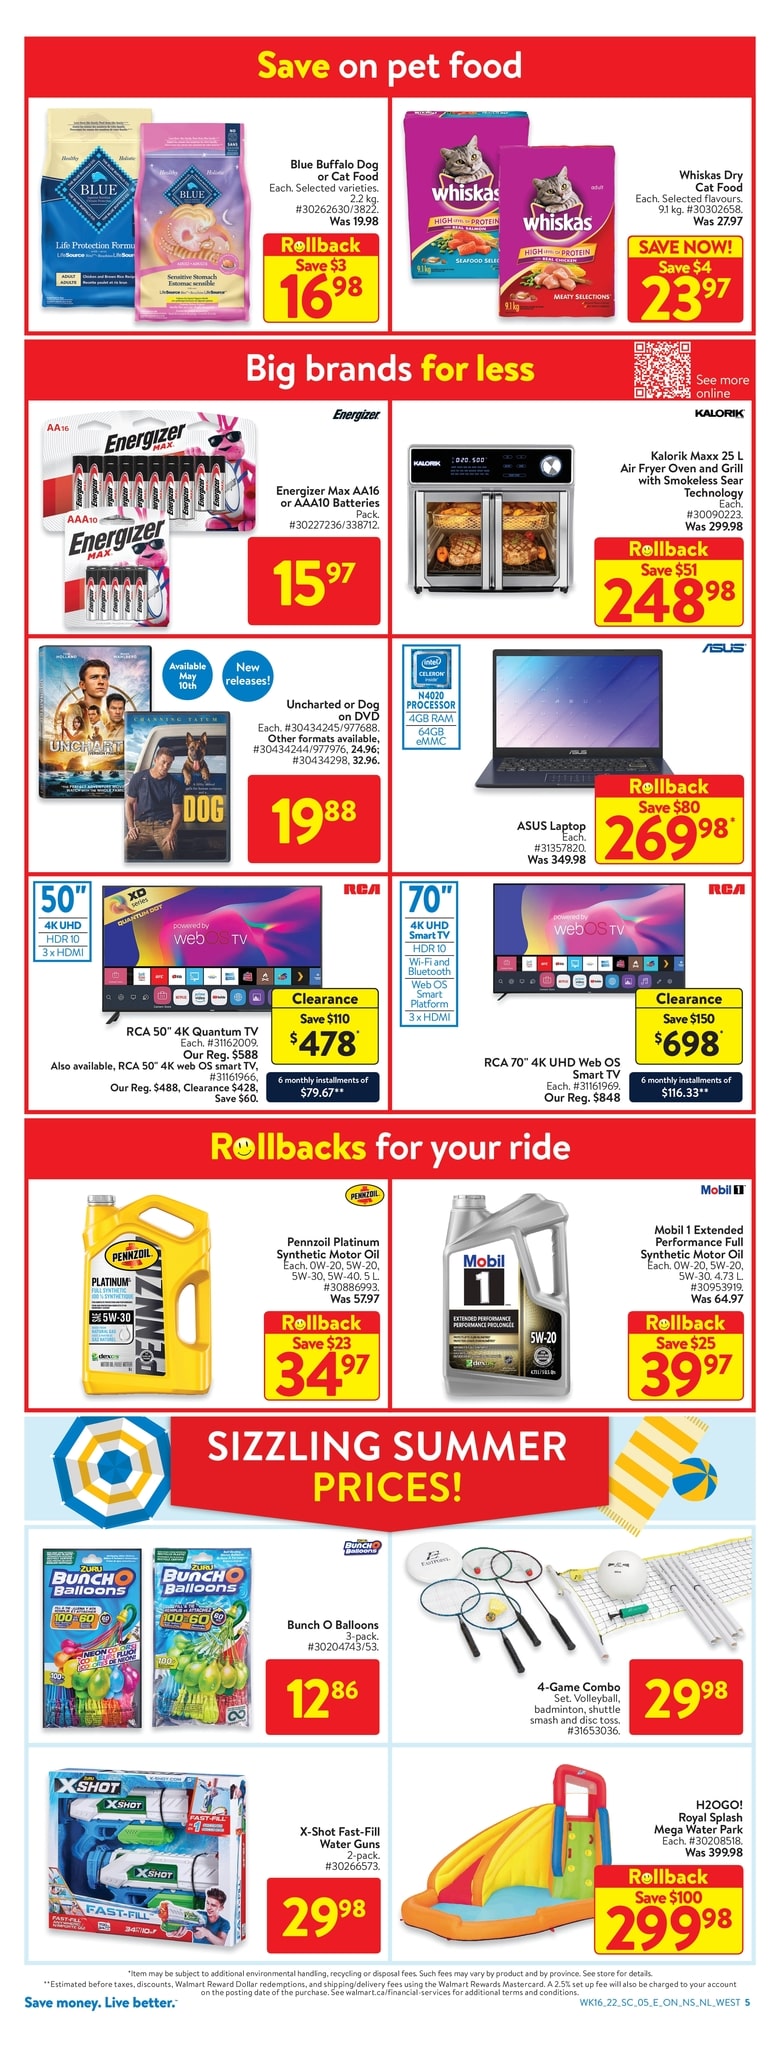 Walmart - Weekly Flyer Specials - Page 8